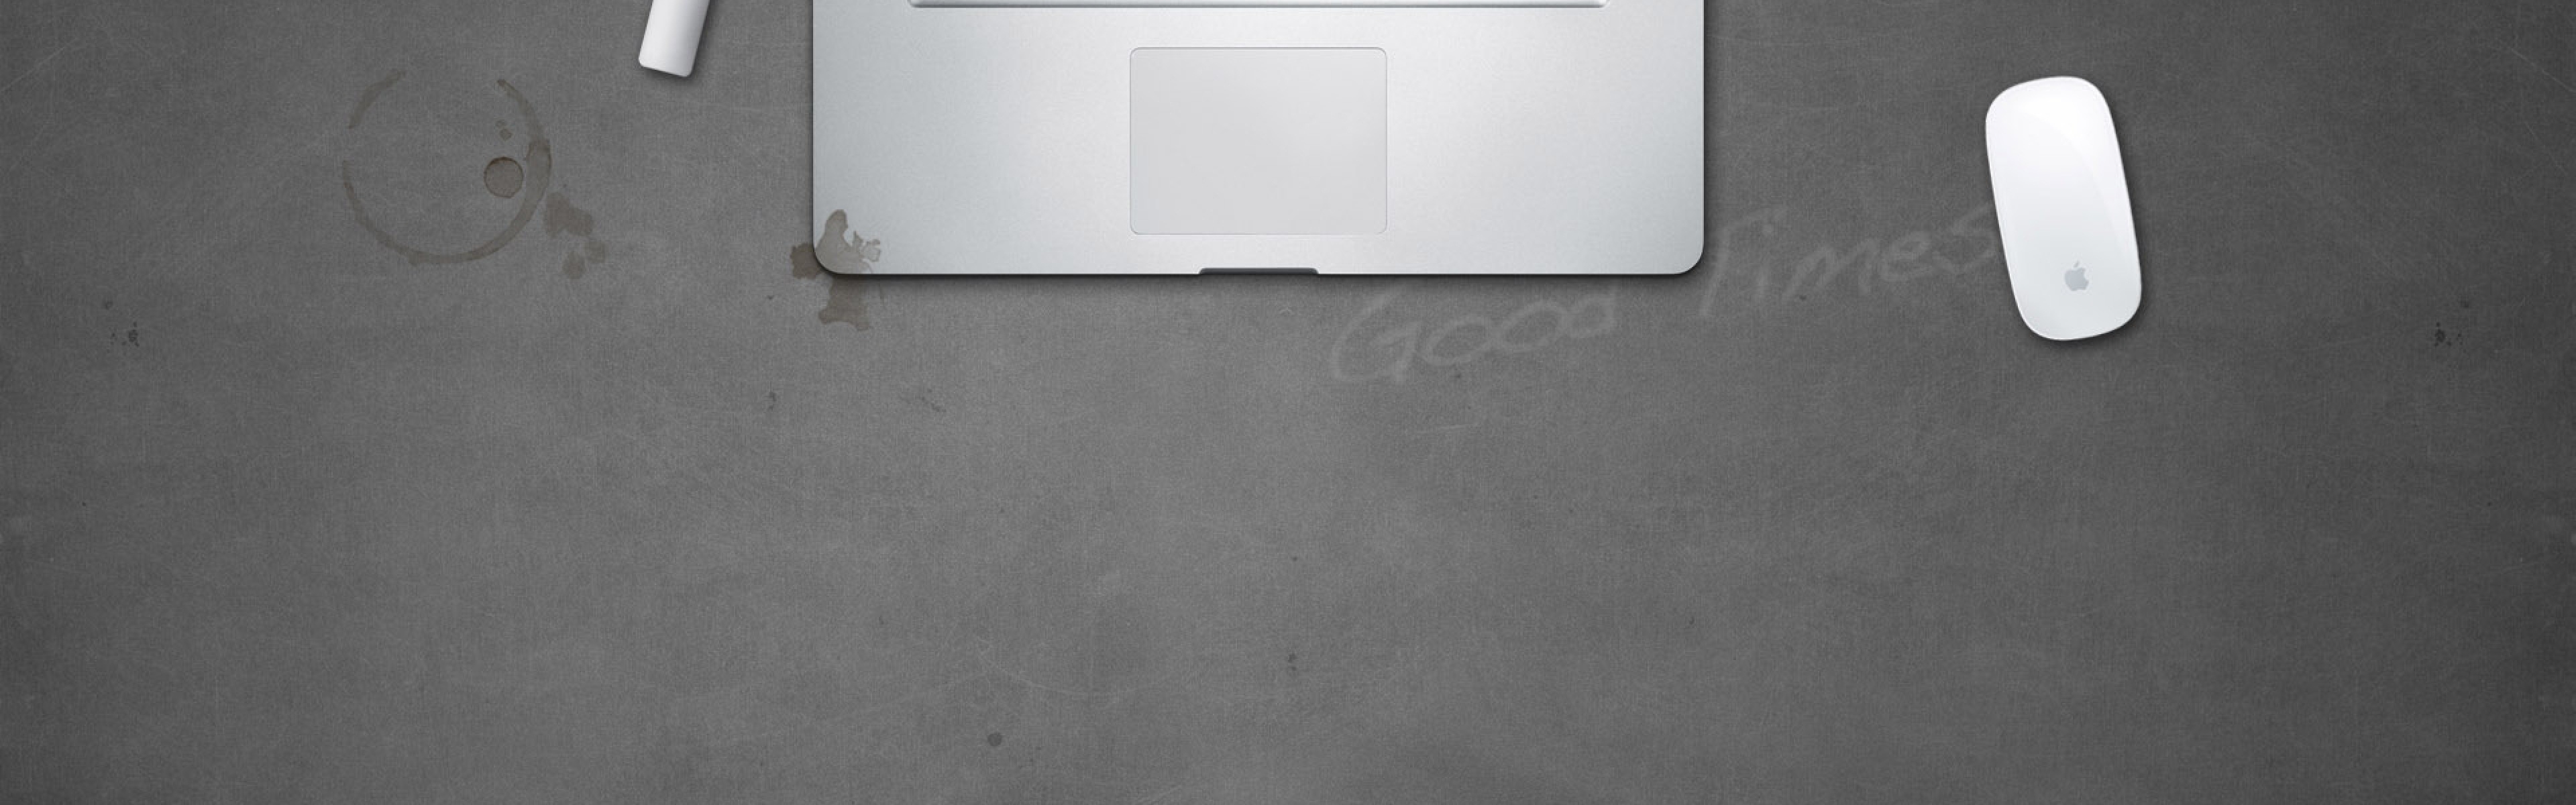 Dual Wide Mac Wallpapers HD, Desktop Backgrounds 3840x1200